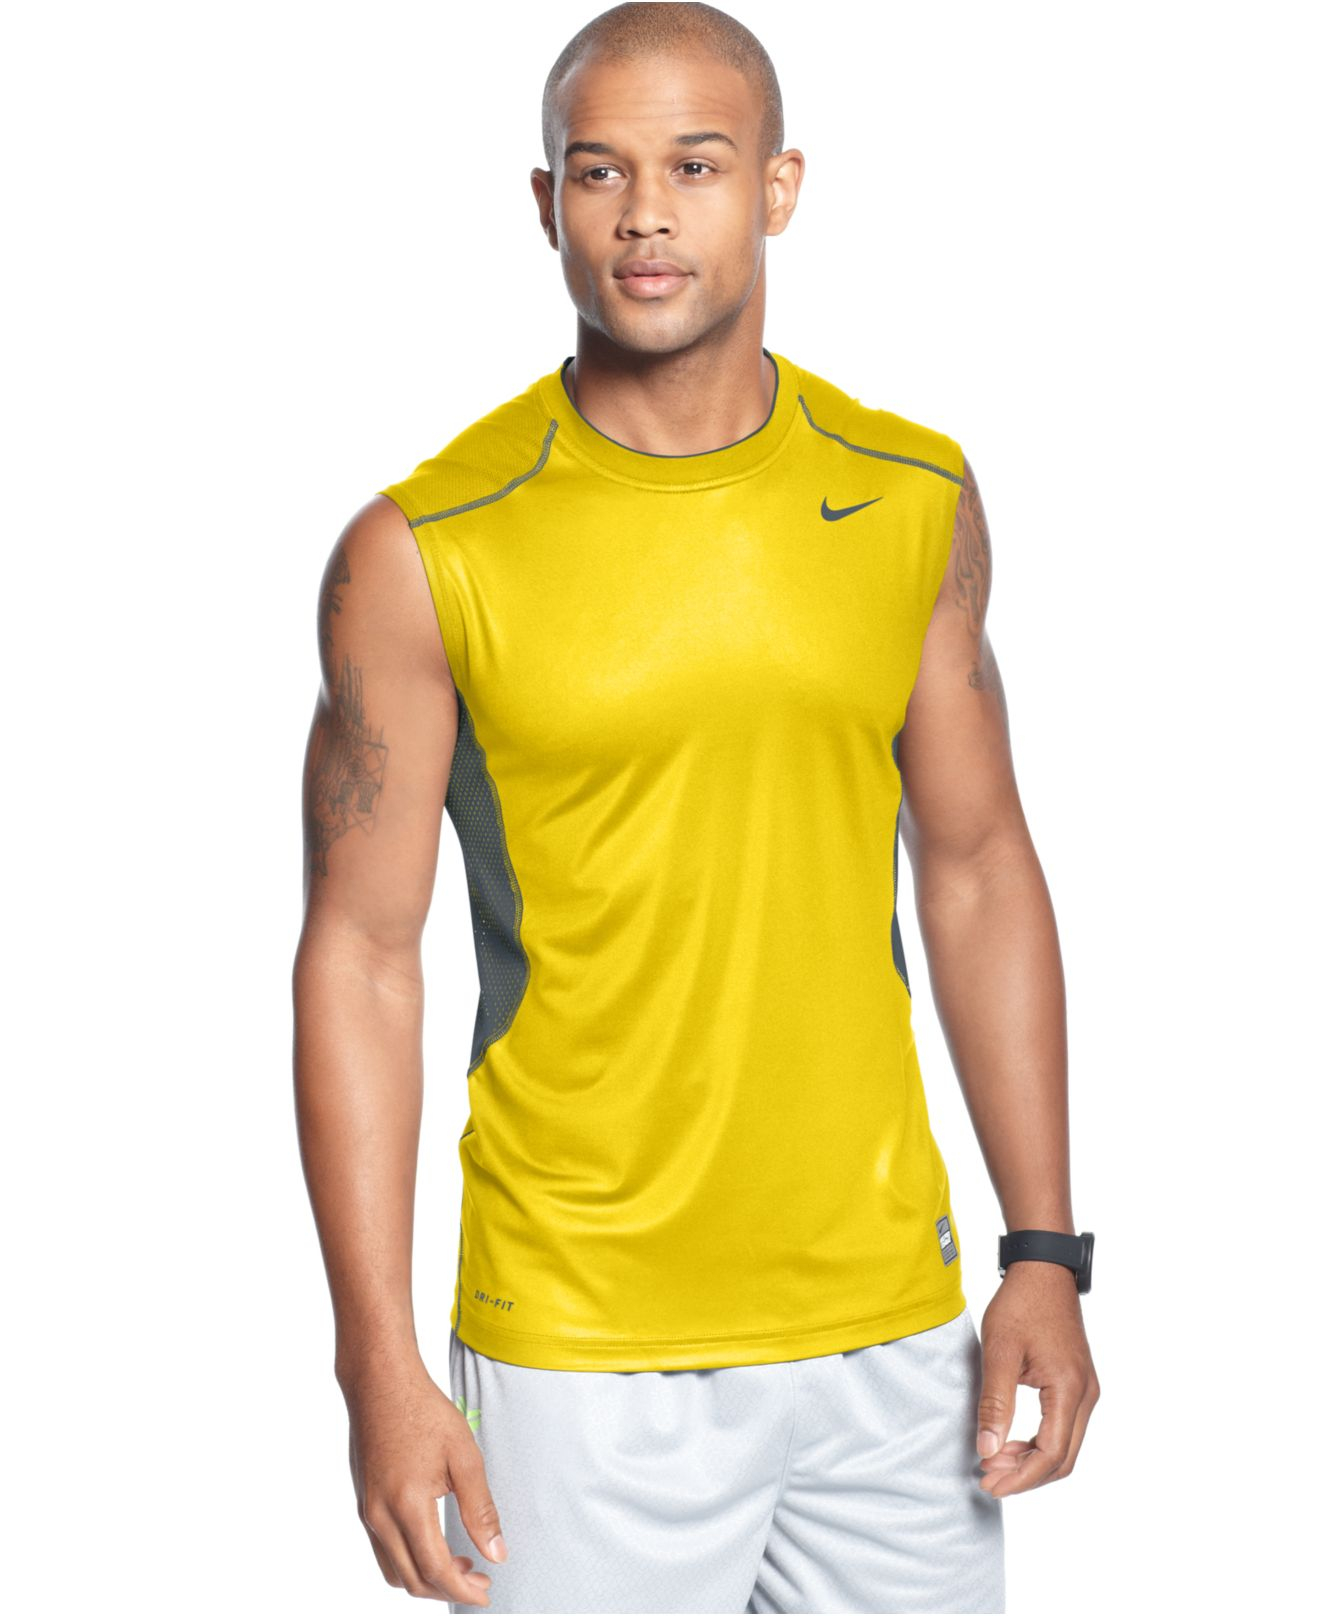 Lyst - Nike Sleeveless Hypercool Tank in Yellow for Men